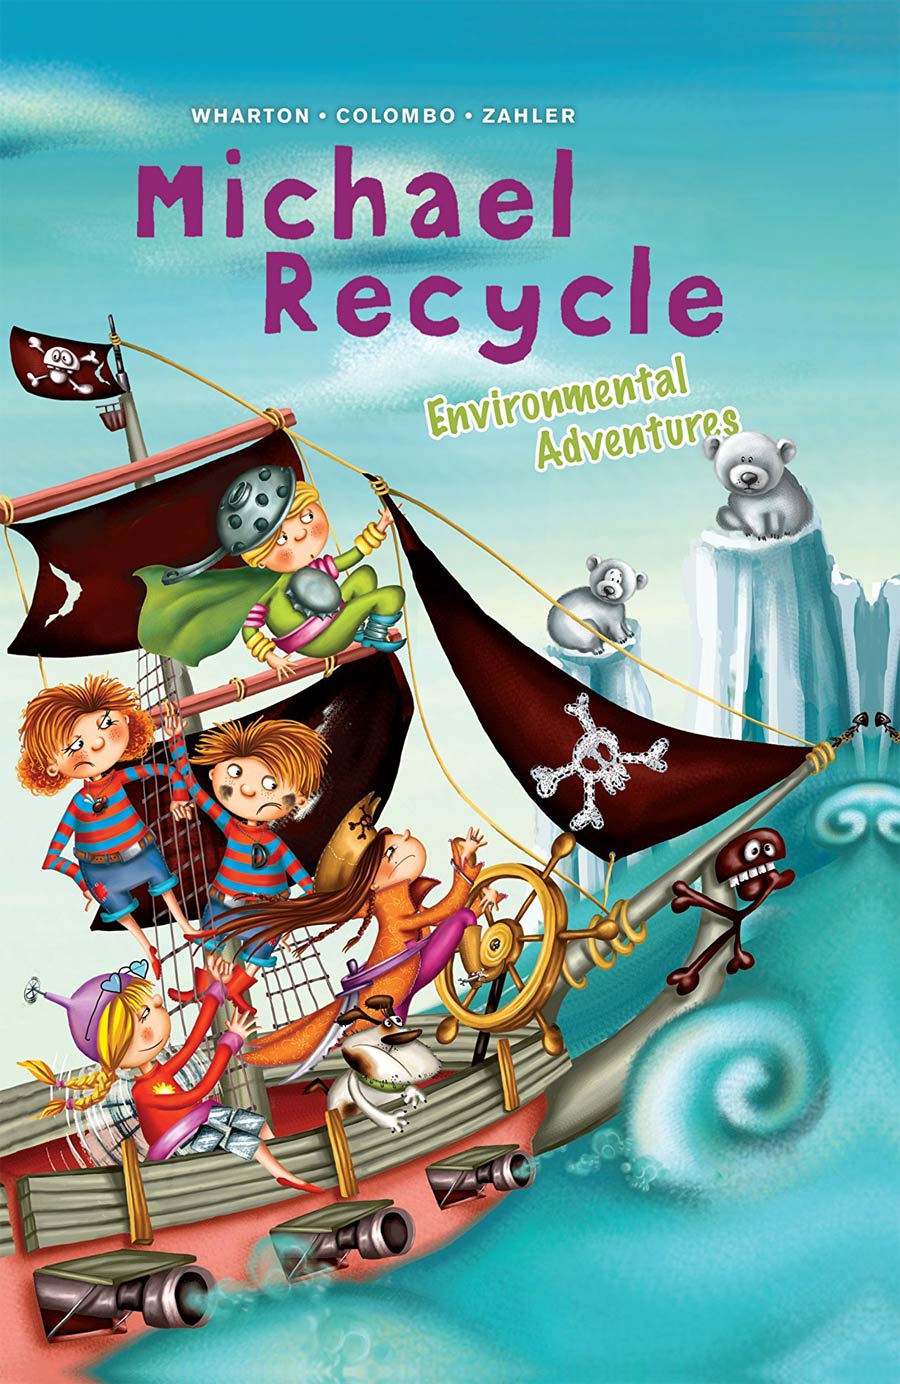 Michael Recycle Environmental Adventures HC